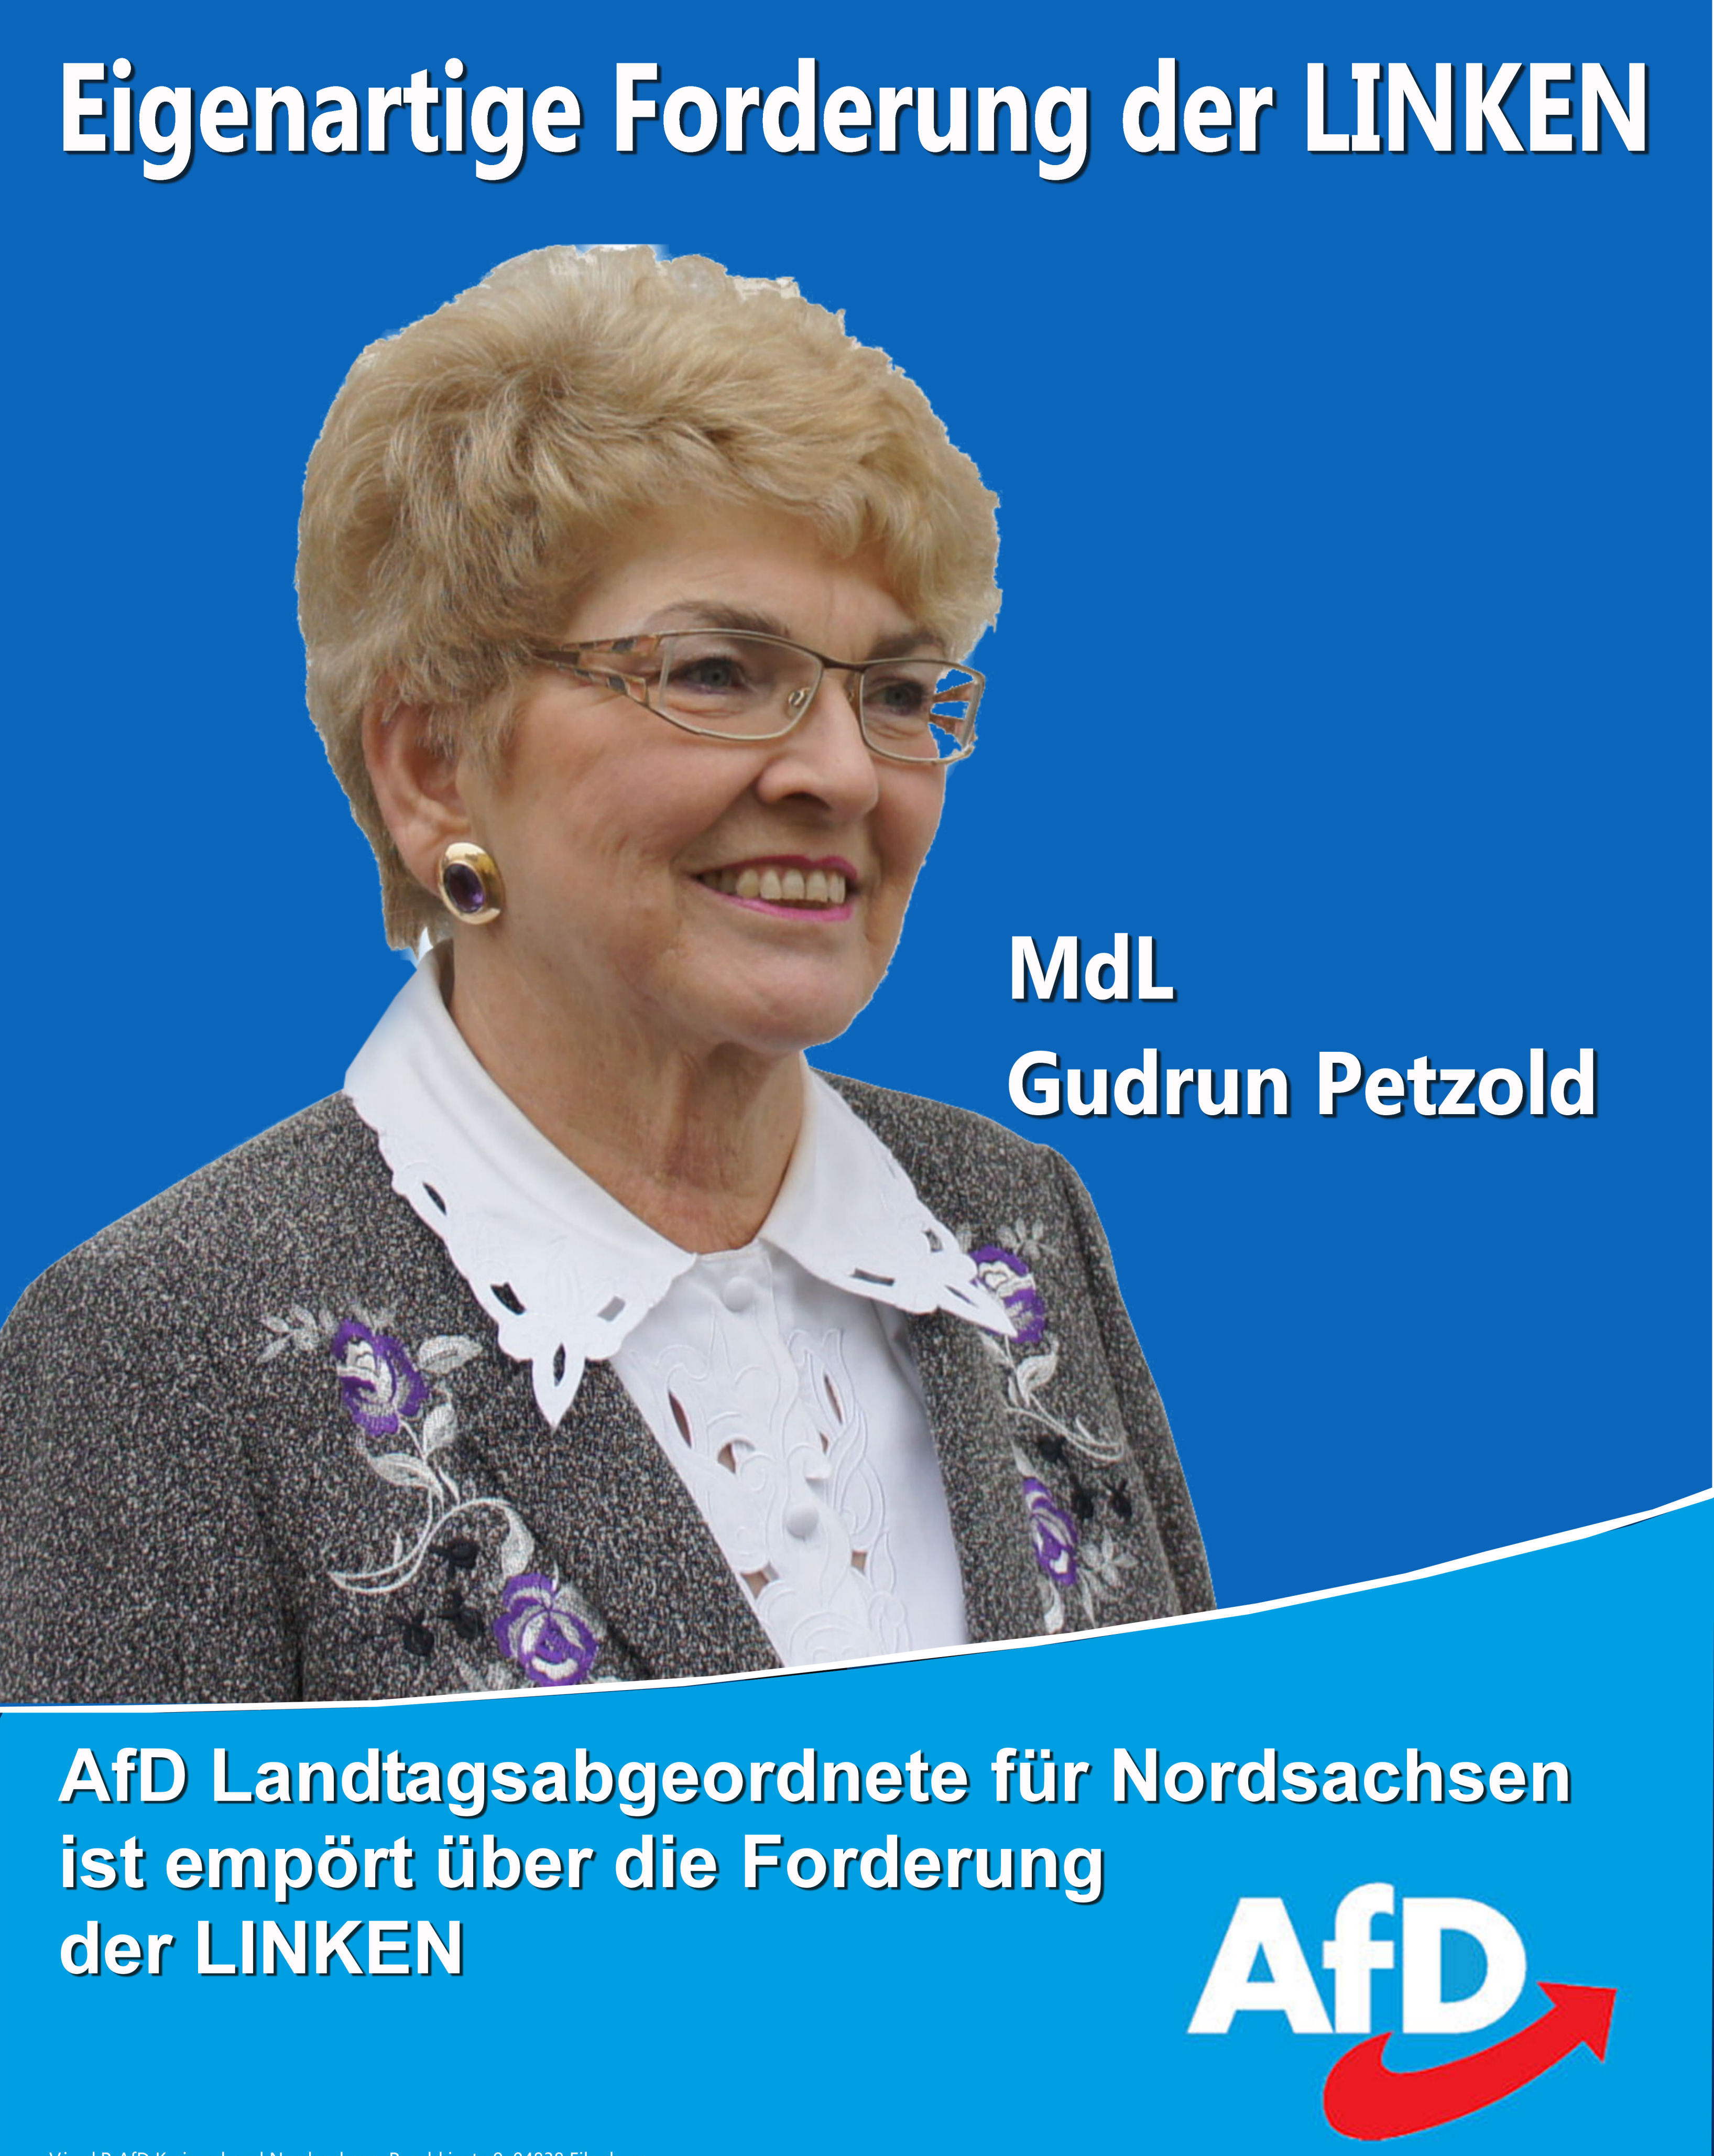 MdL Gudrun Petzold empört über Forderung der LINKEN